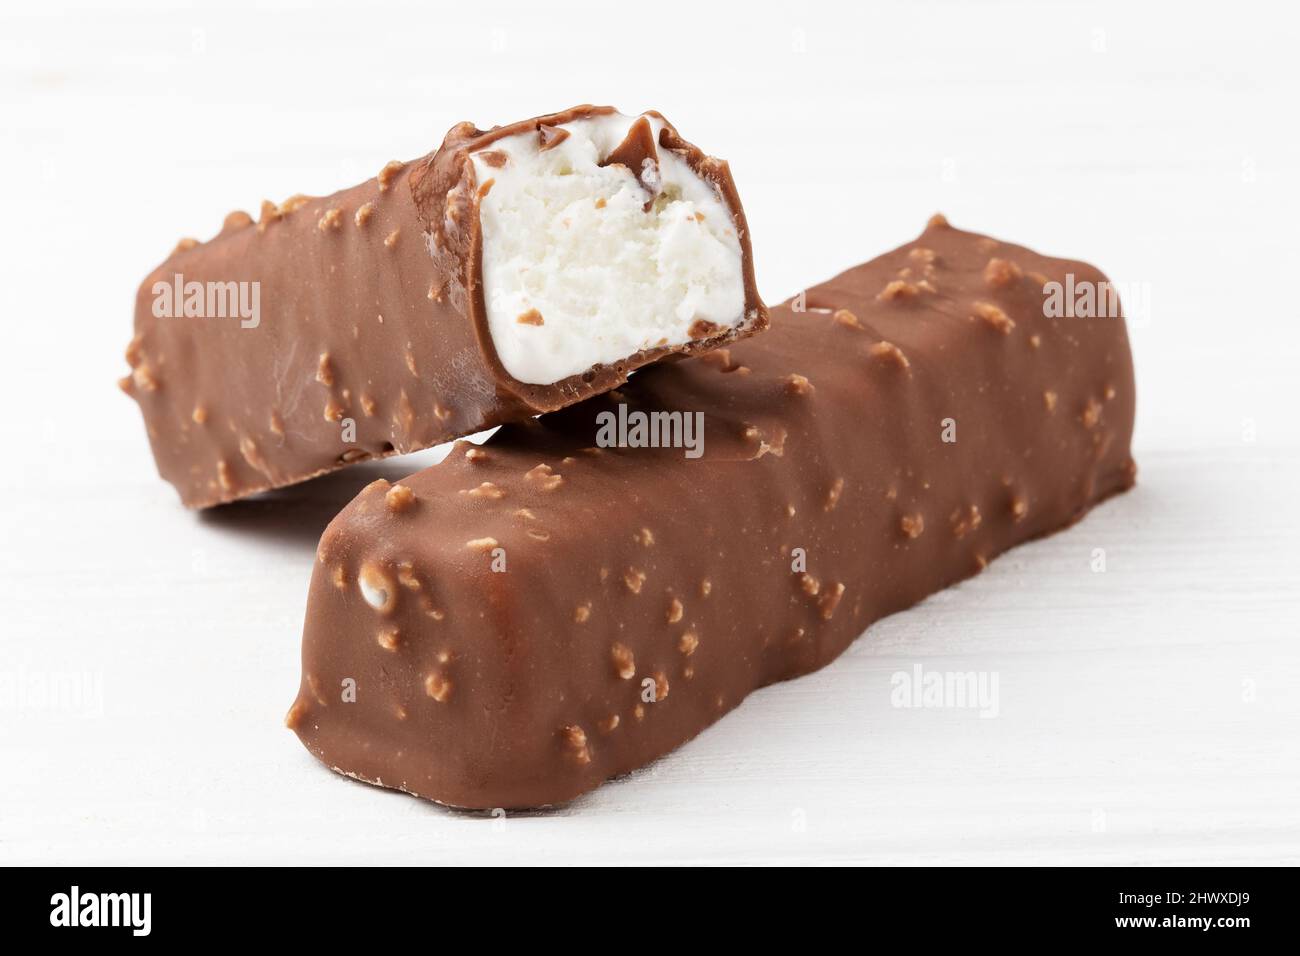 Two chocolate ice cream bars on white background close up macro shot Stock Photo